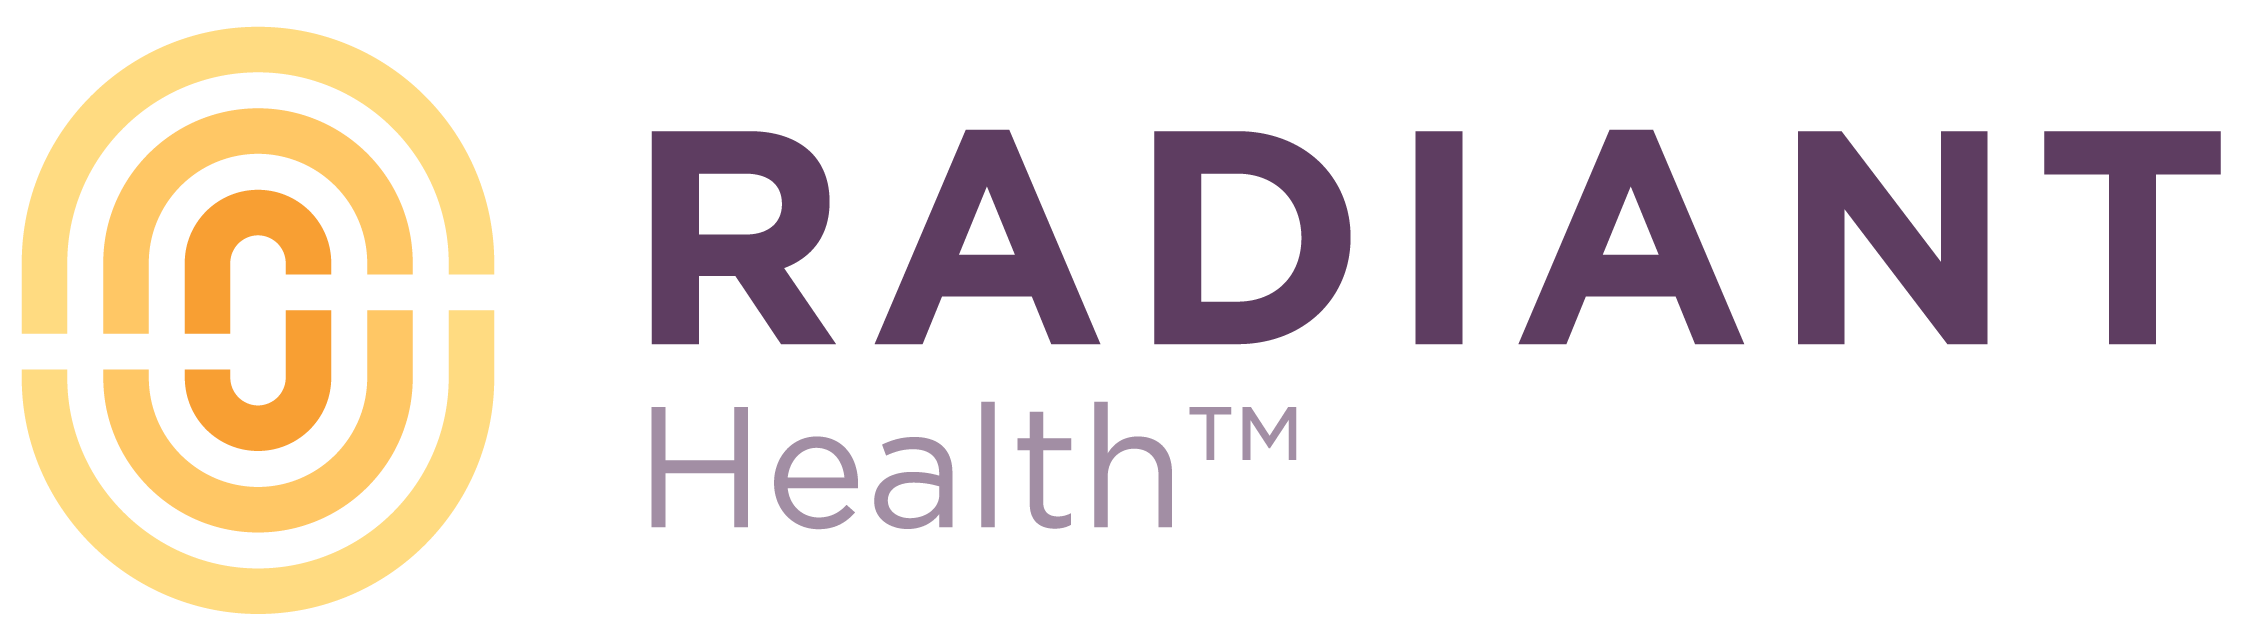 Radiant Health